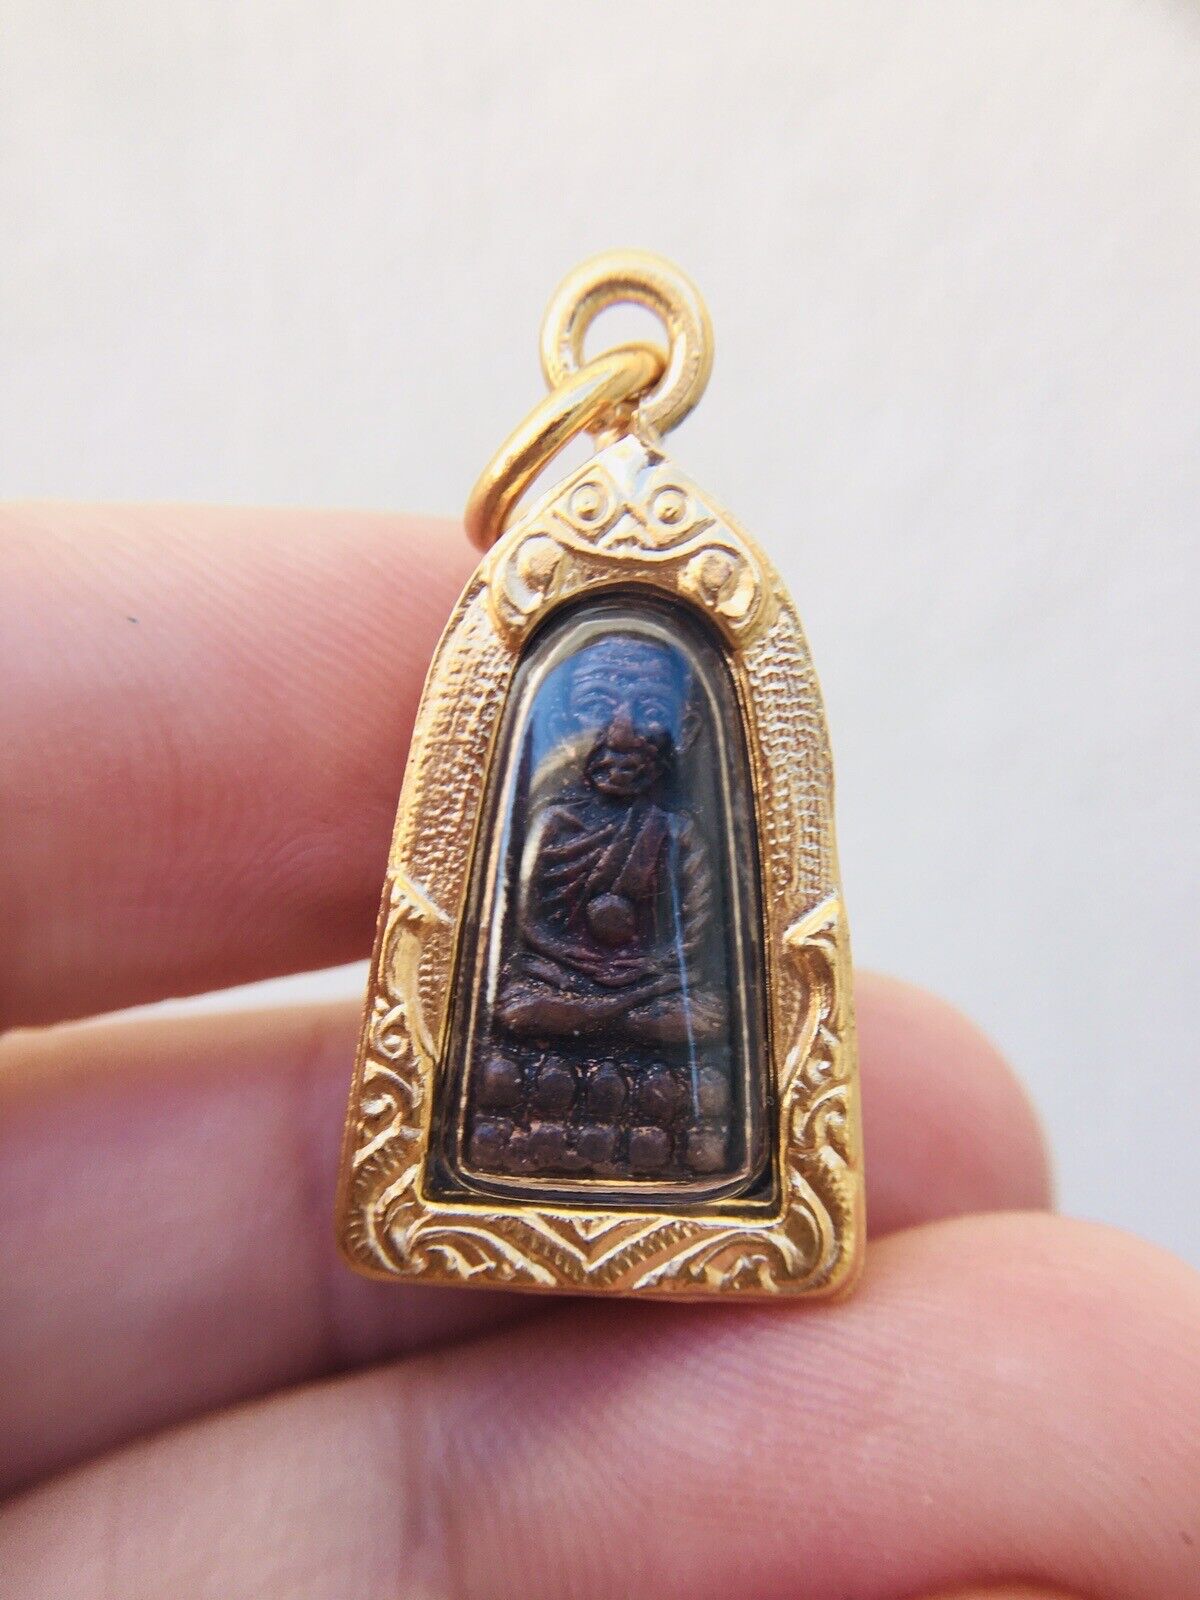 Gorgeous Mini Phra Lp Thuad Thai Amulet Talisman Charm Luck Protection Vol. 45.2